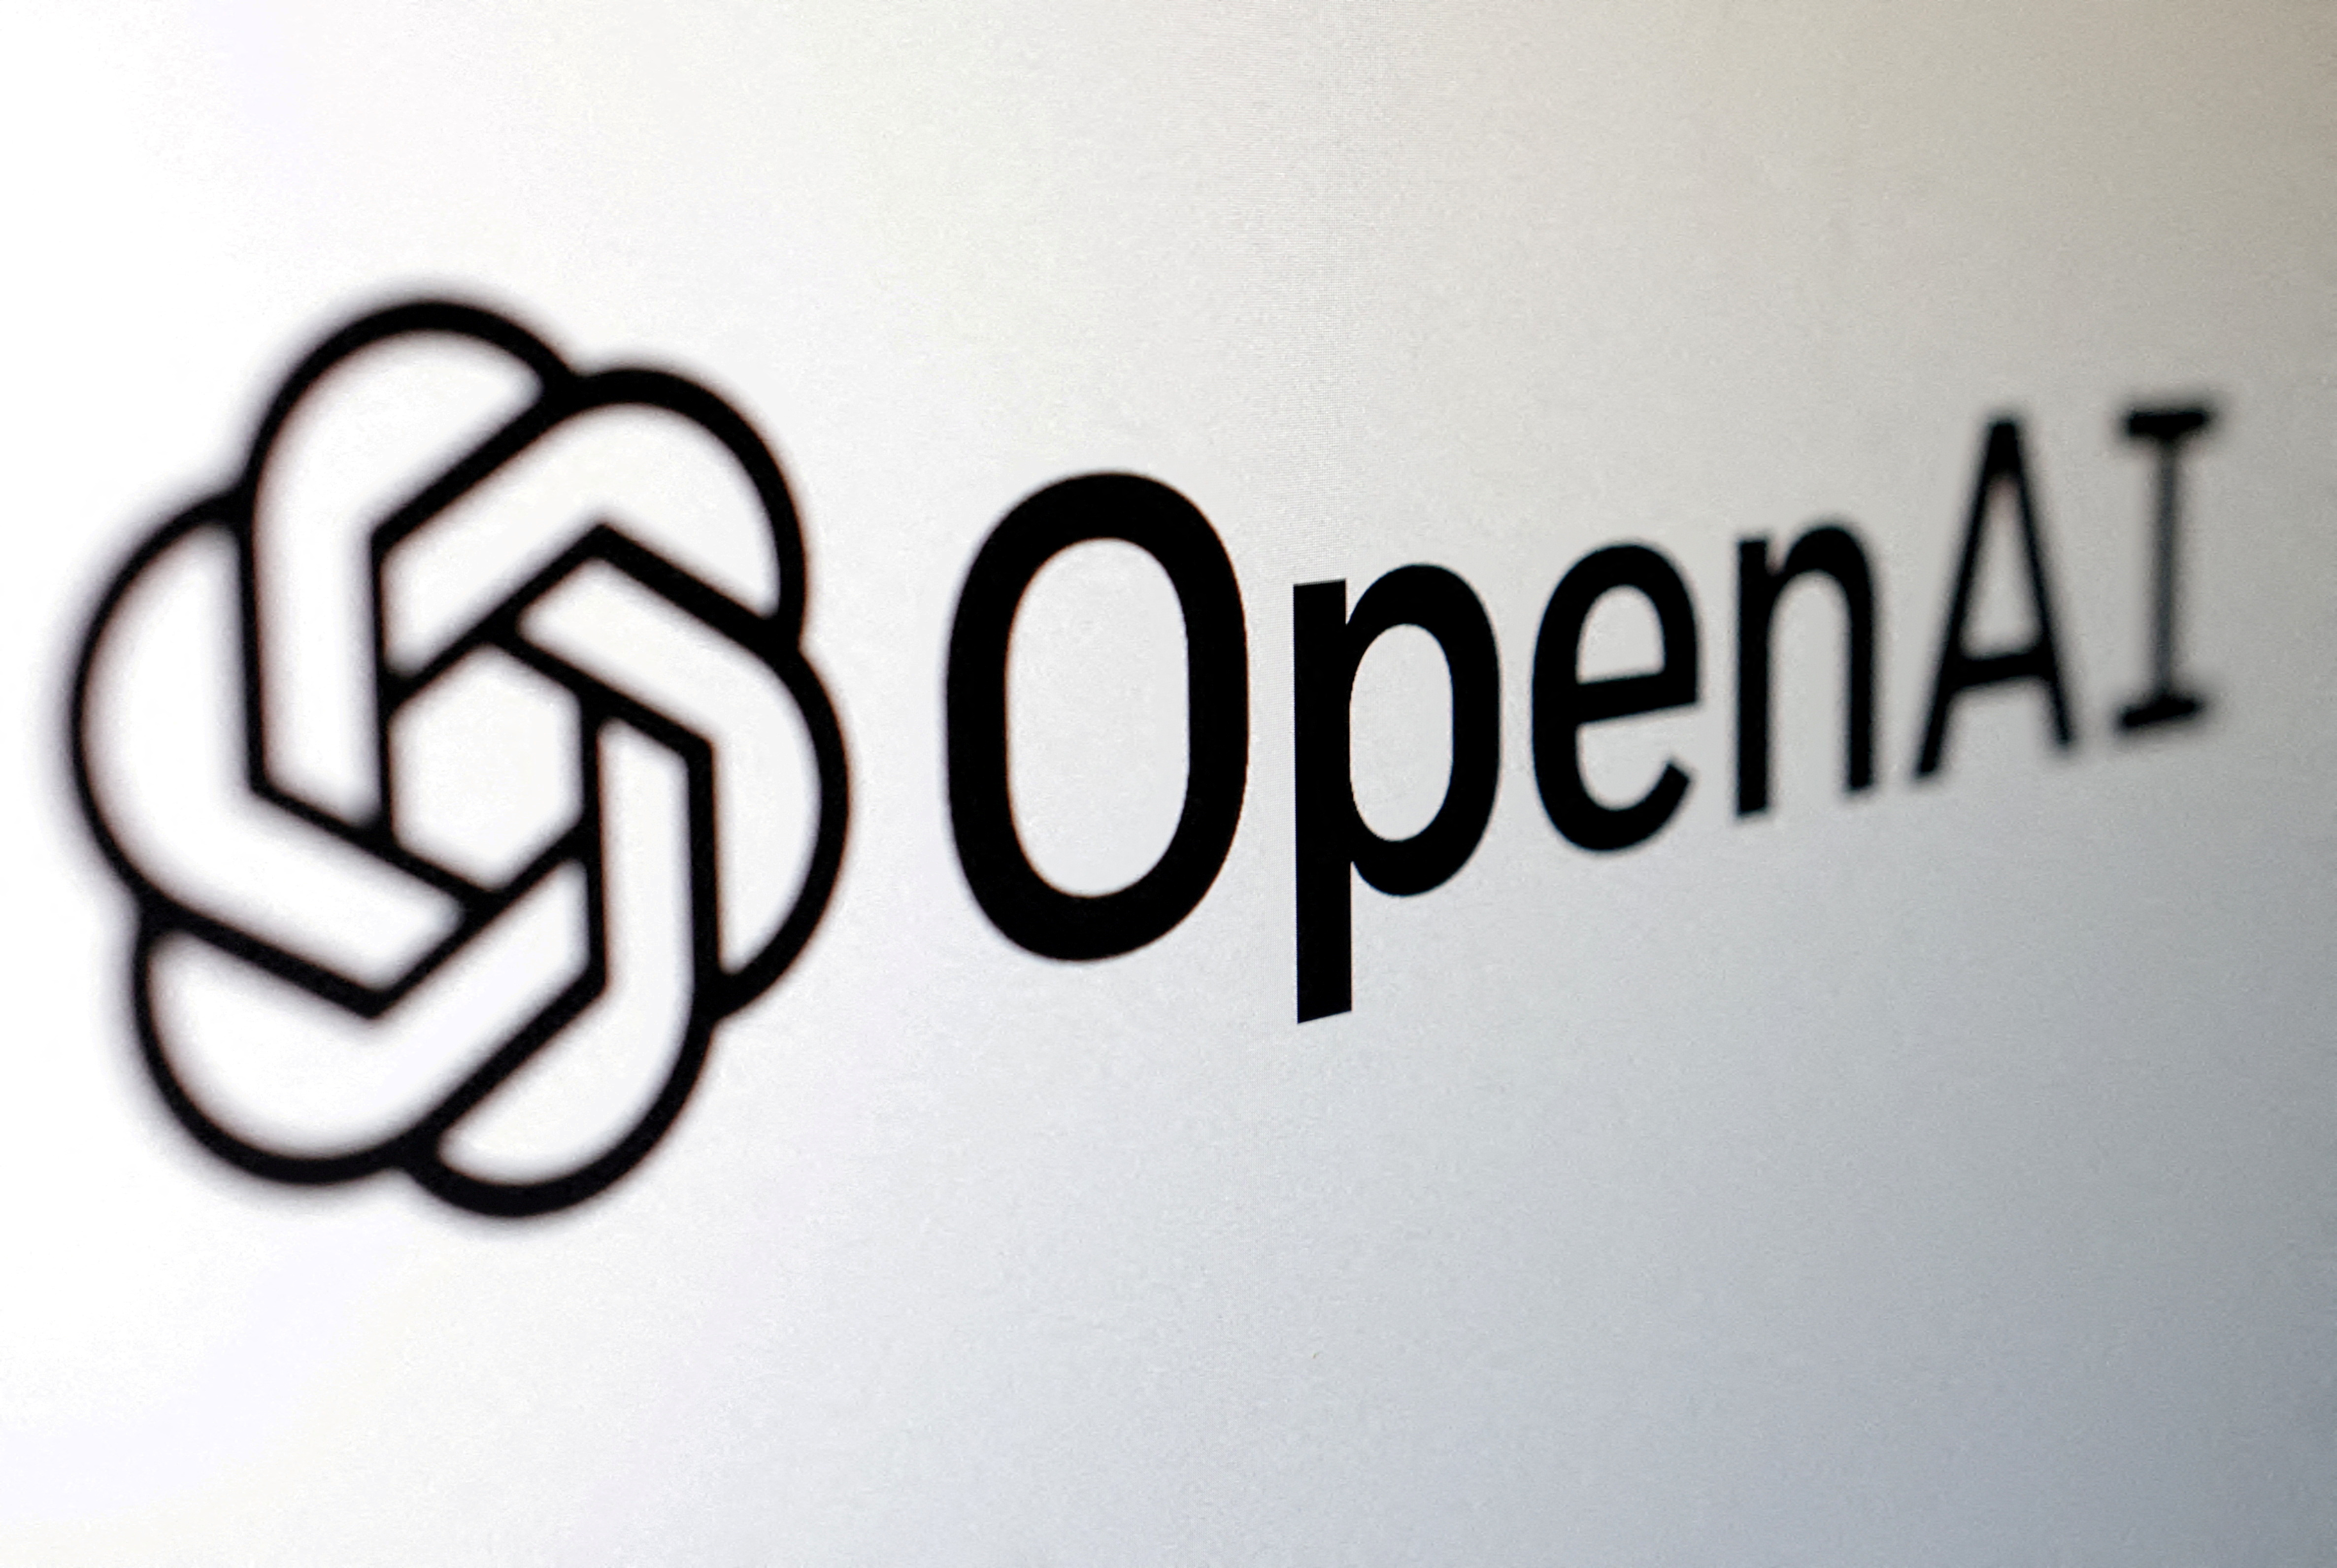 The illustration shows the OpenAI logo